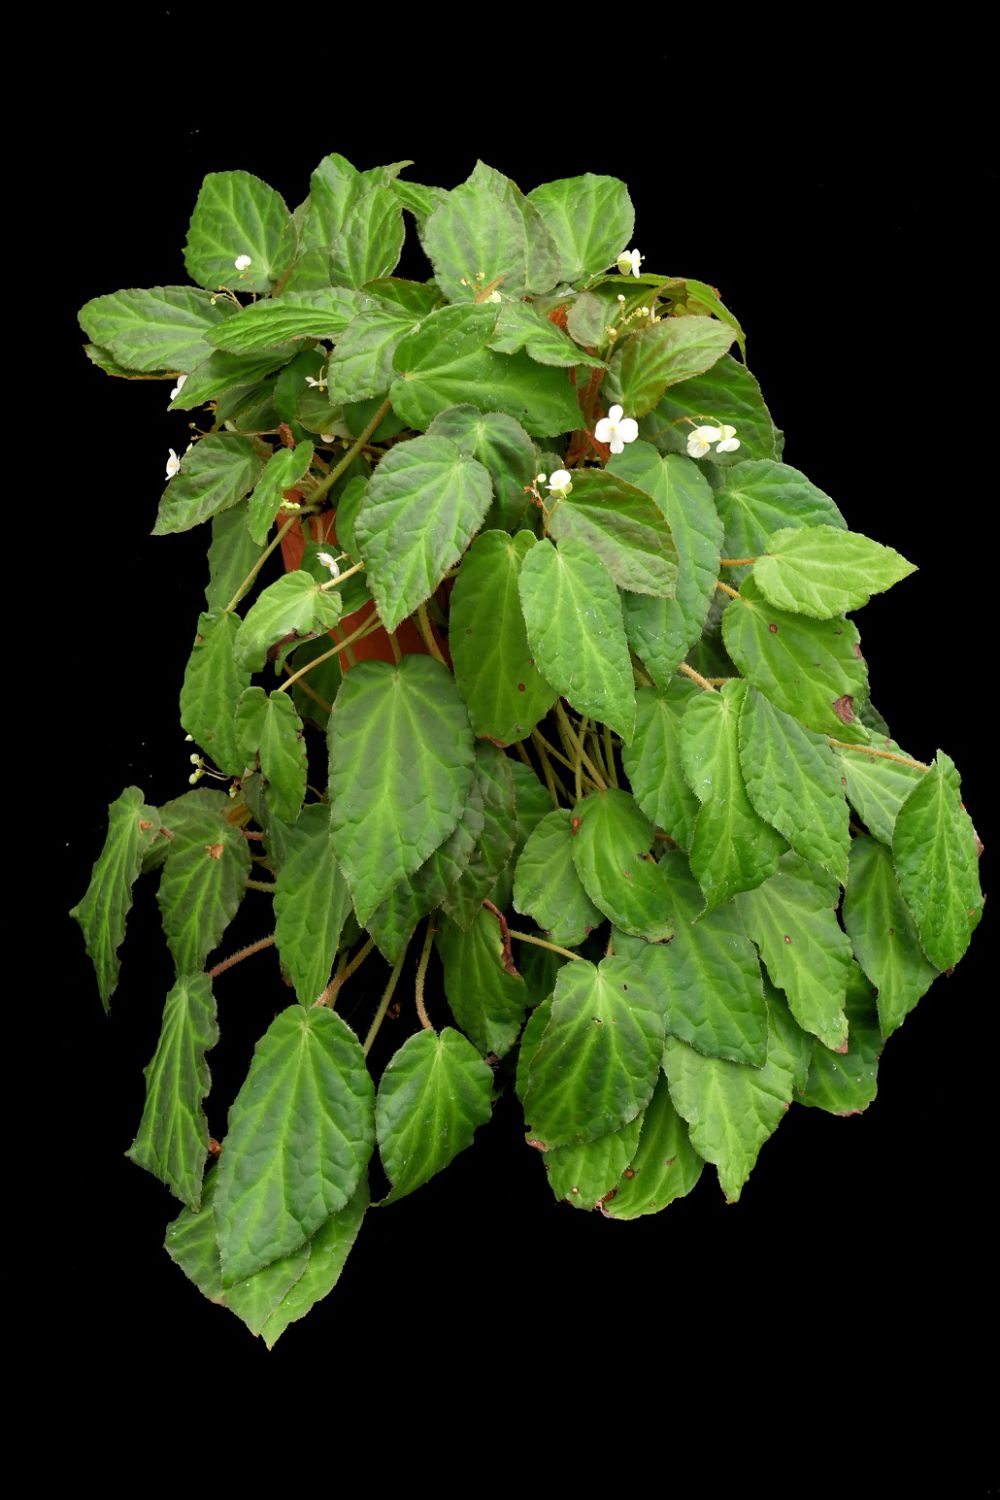 5 Spesies Baru Begonia asal Indonesia, Kamu Harus Tahu!